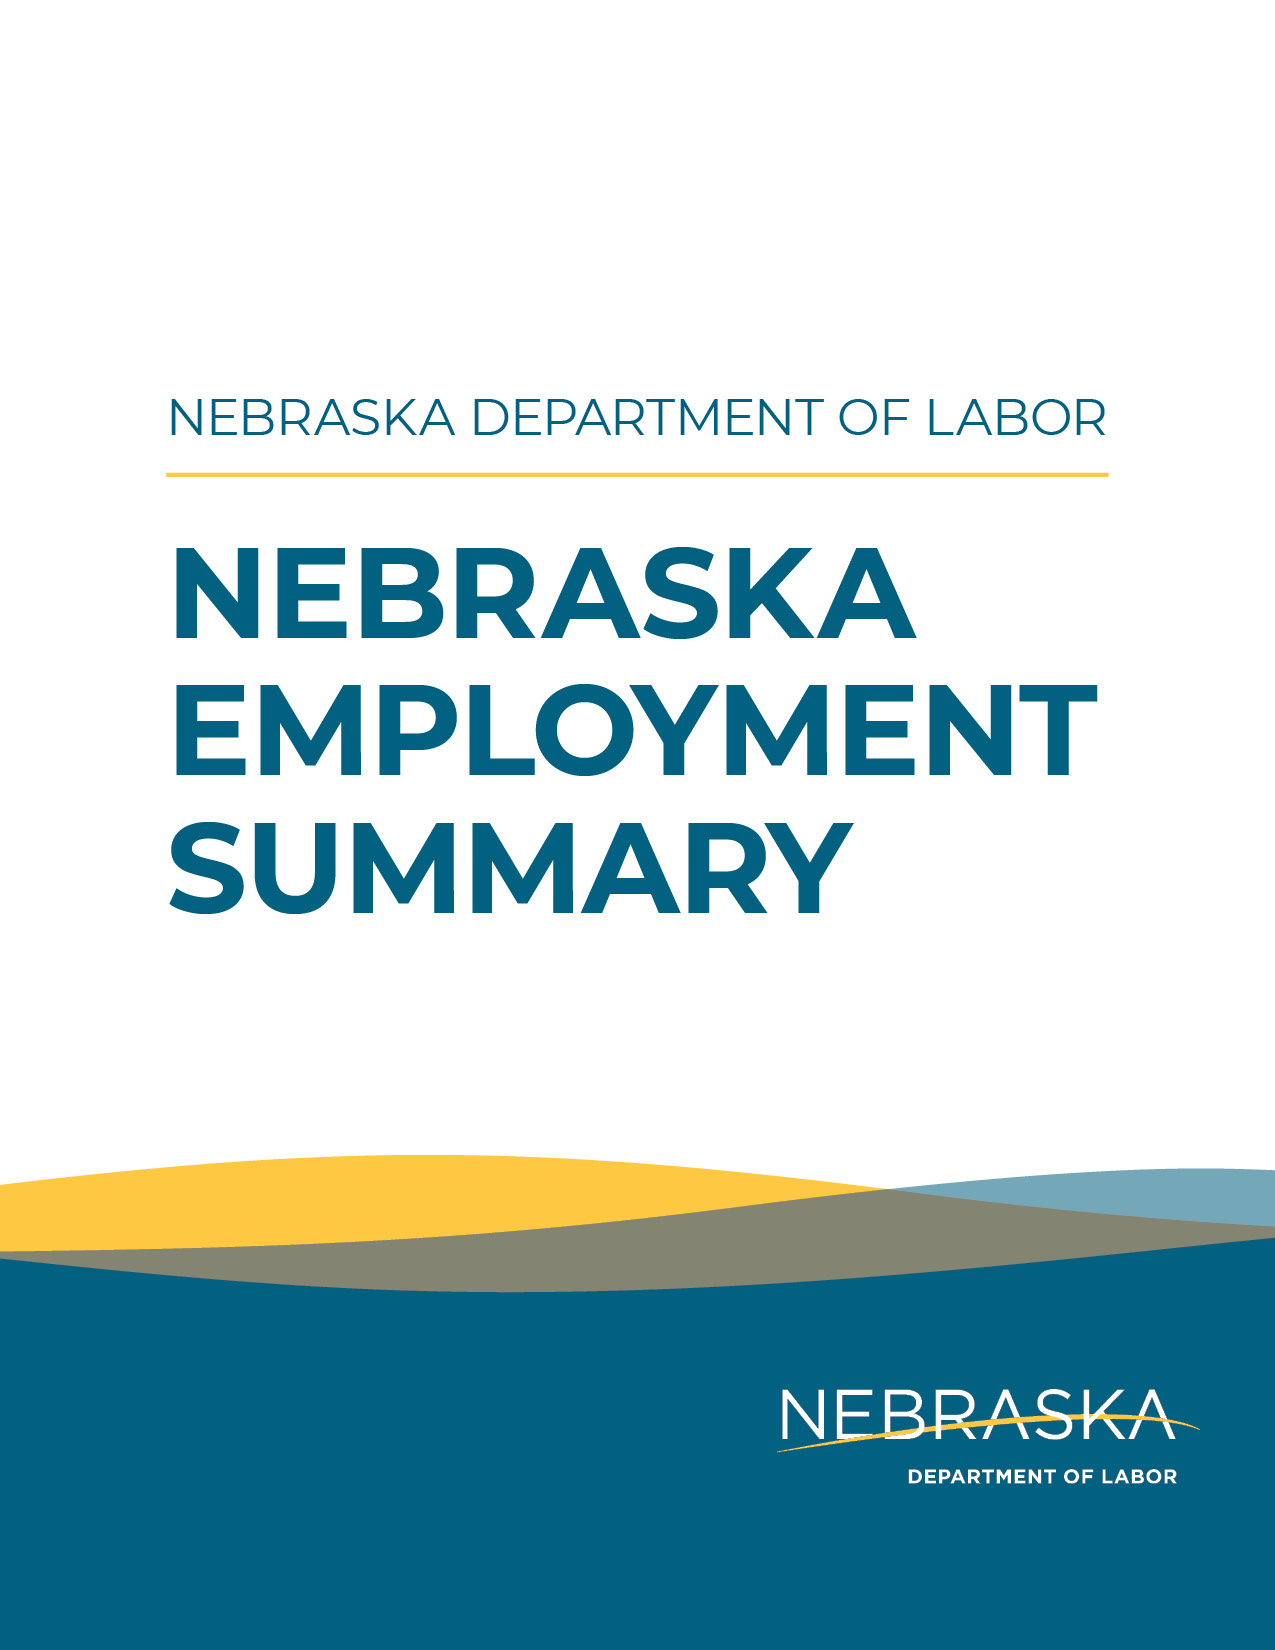 Nebraska Department of Labor Logo